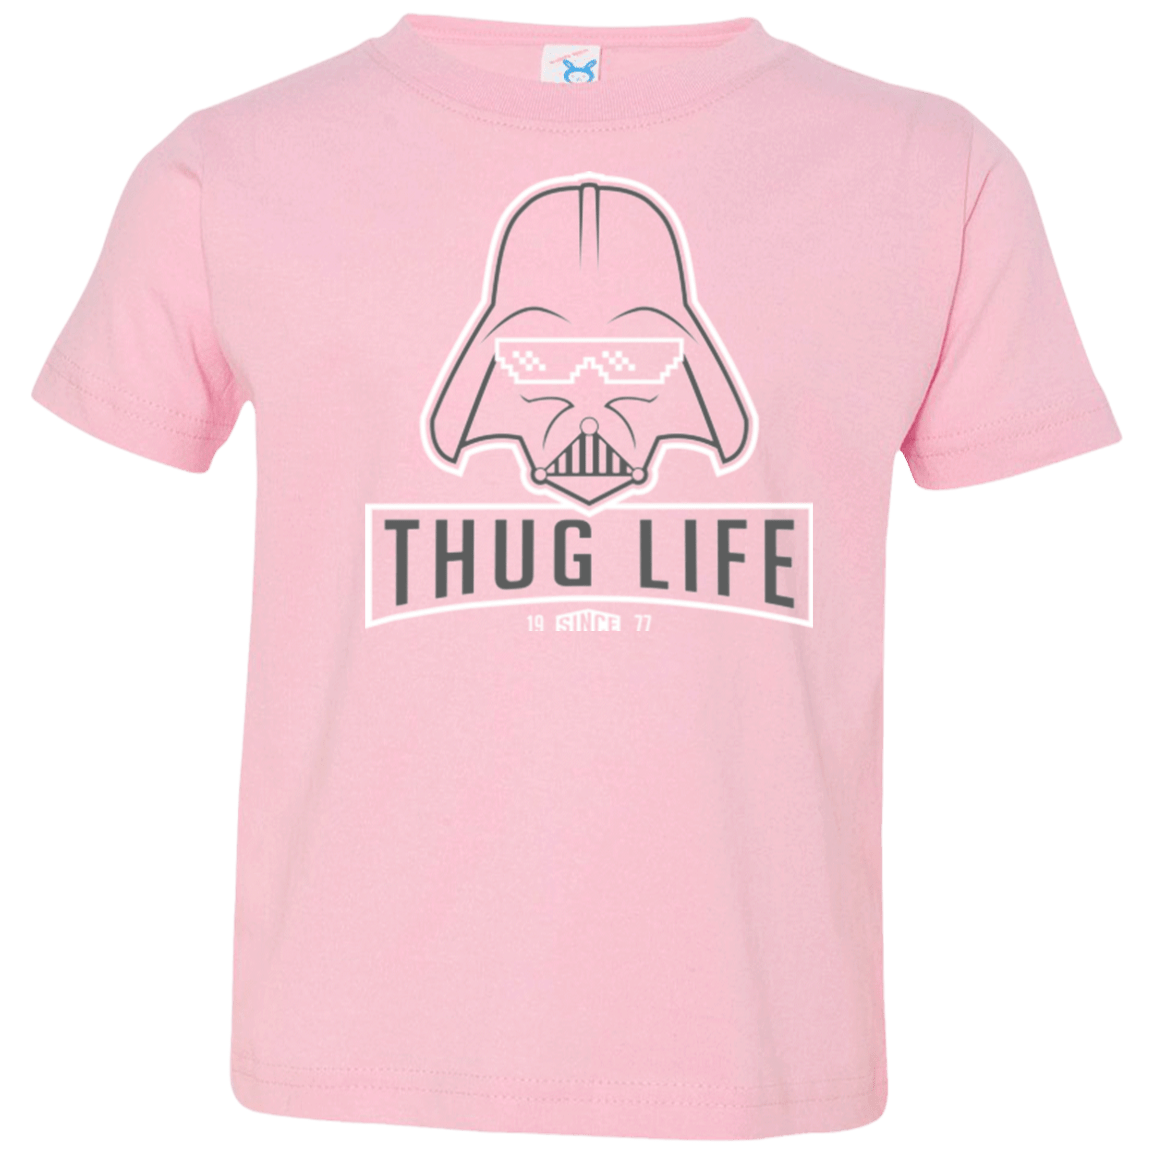 My Life (1) Toddler Premium T-Shirt